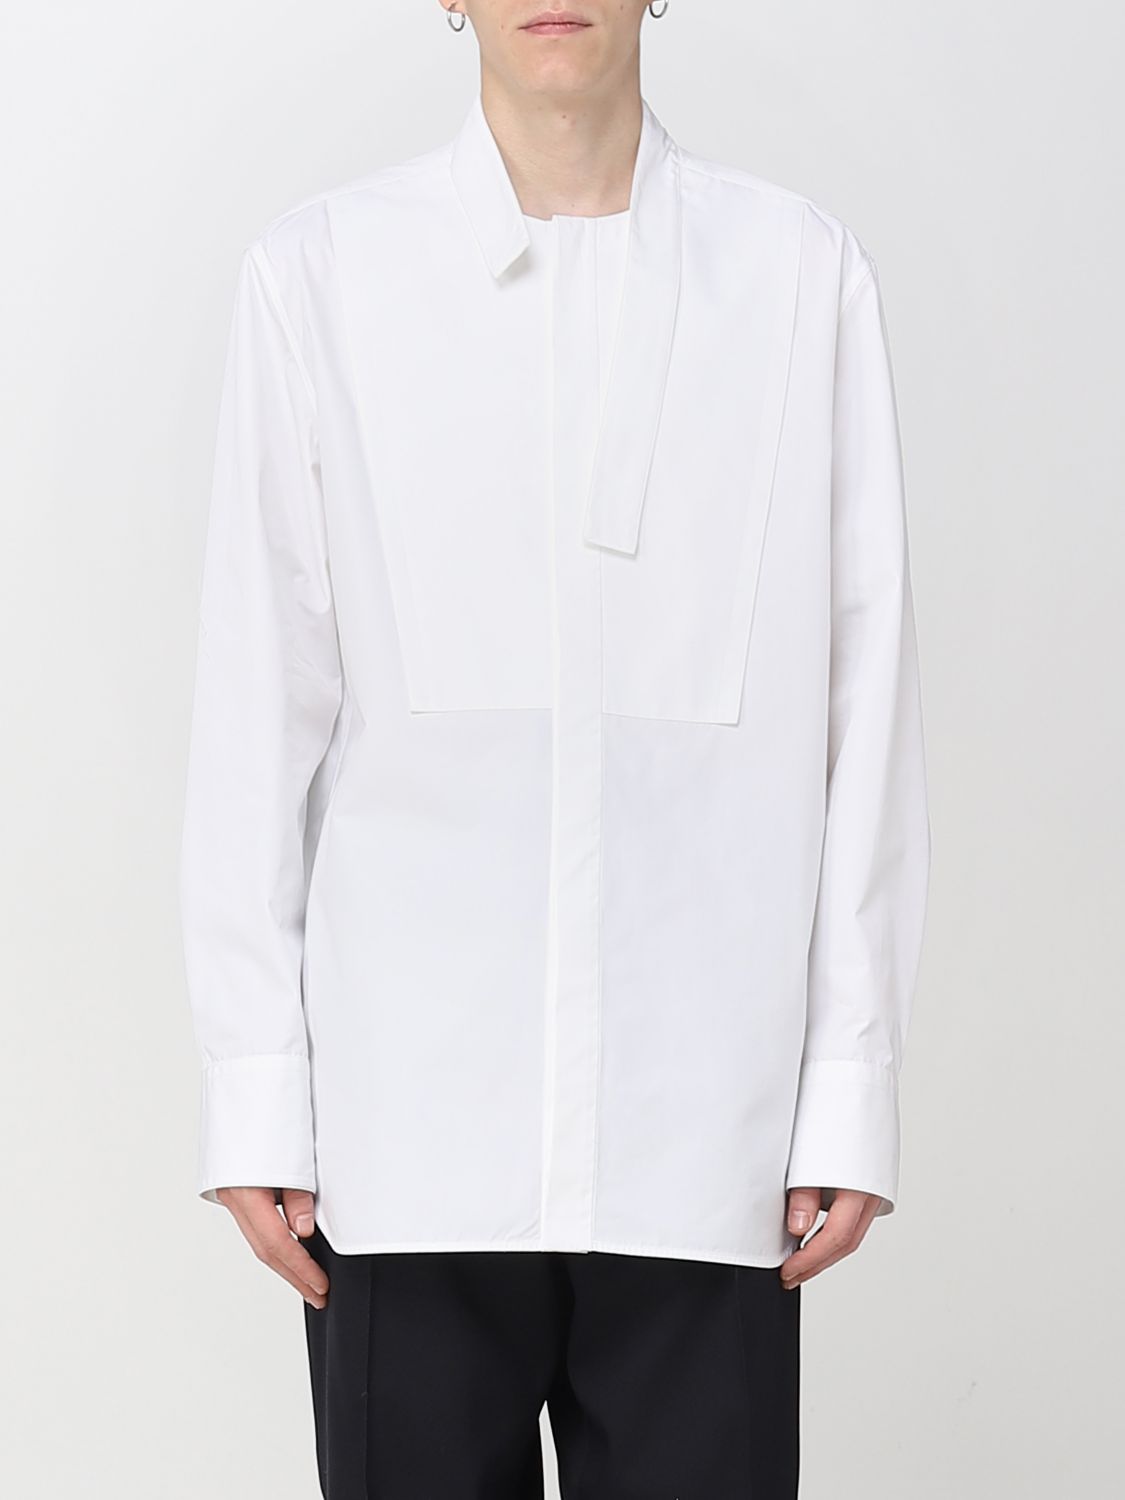 As nieuws bekennen Jil Sander Outlet: shirt for man - White | Jil Sander shirt J21DL0014J45002  online on GIGLIO.COM